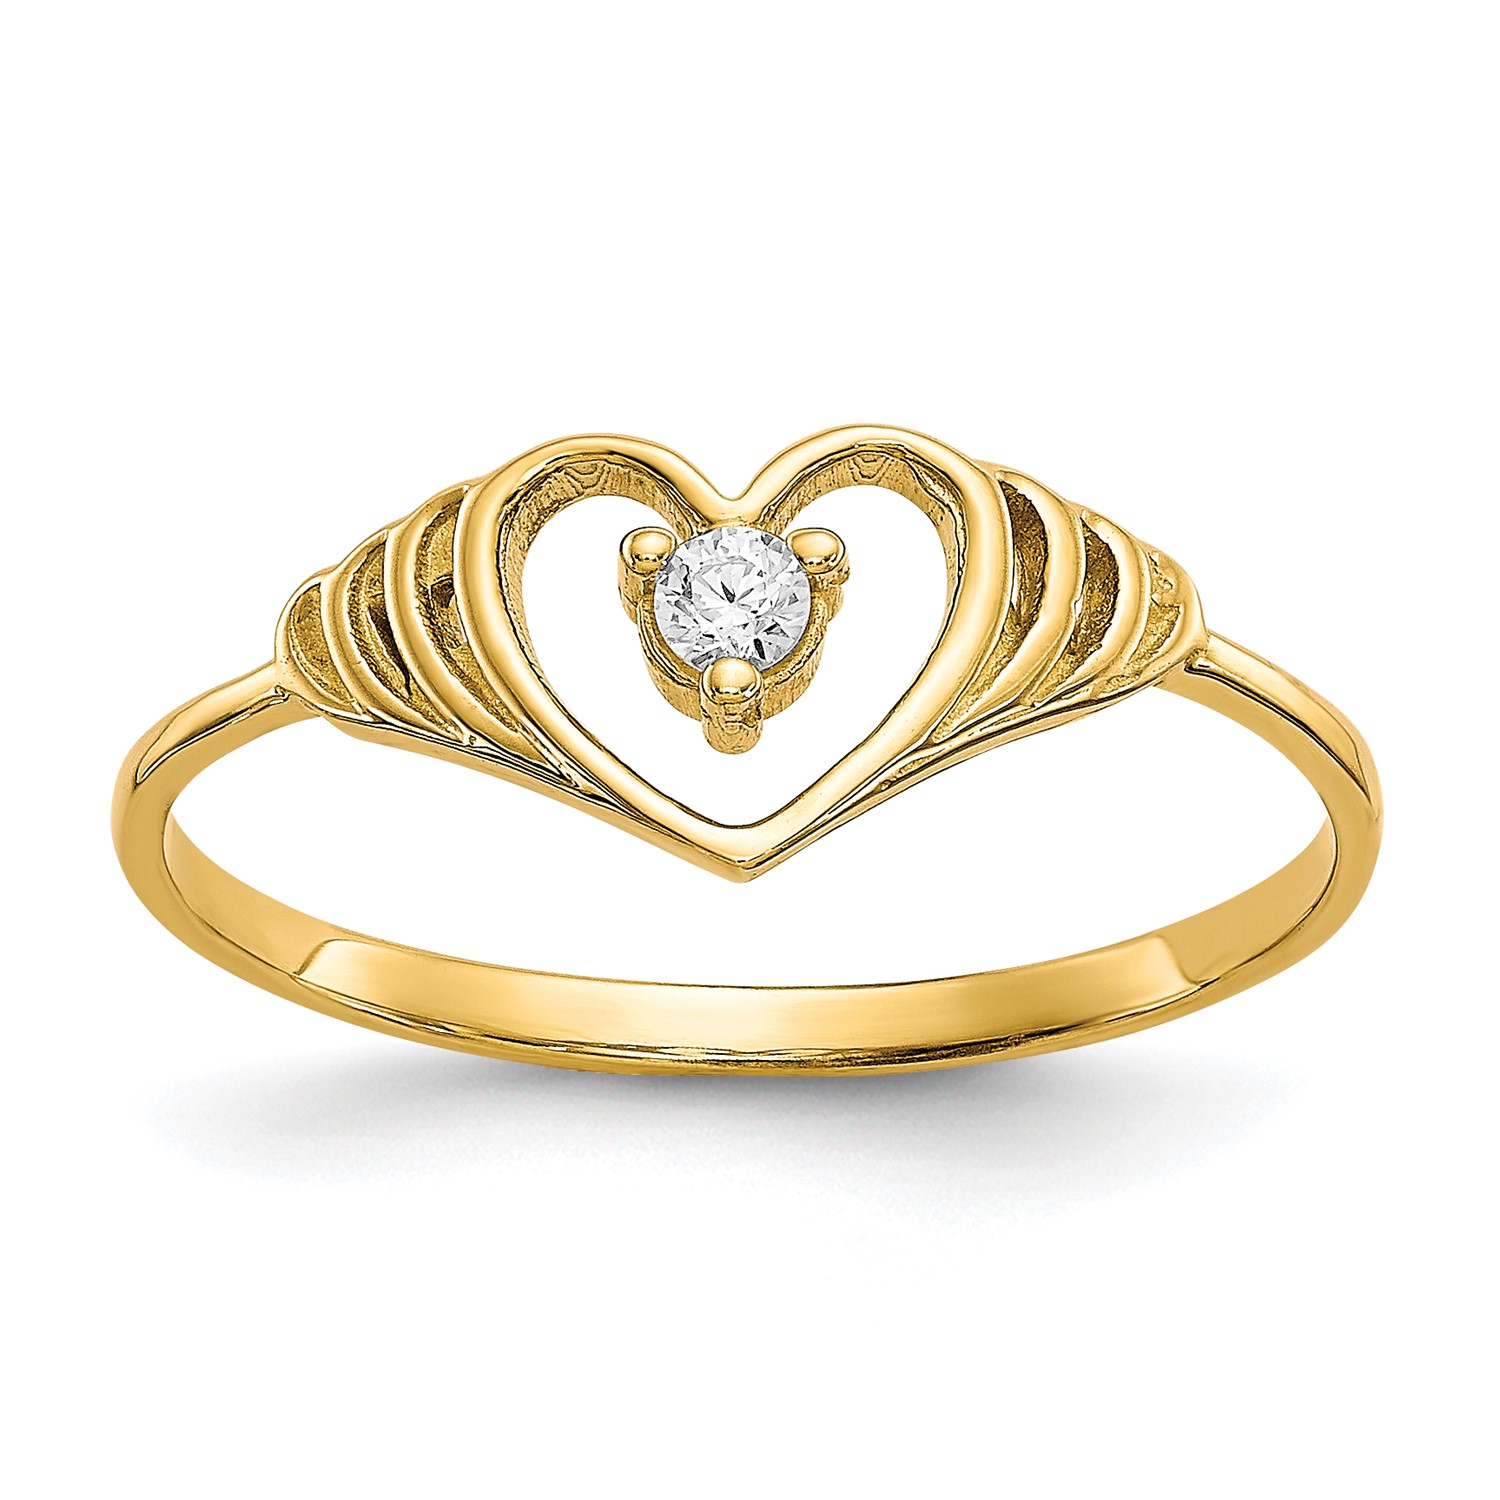 10k Yellow Gold CZ Heart Ring. Metal Wt-0.97g | eBay